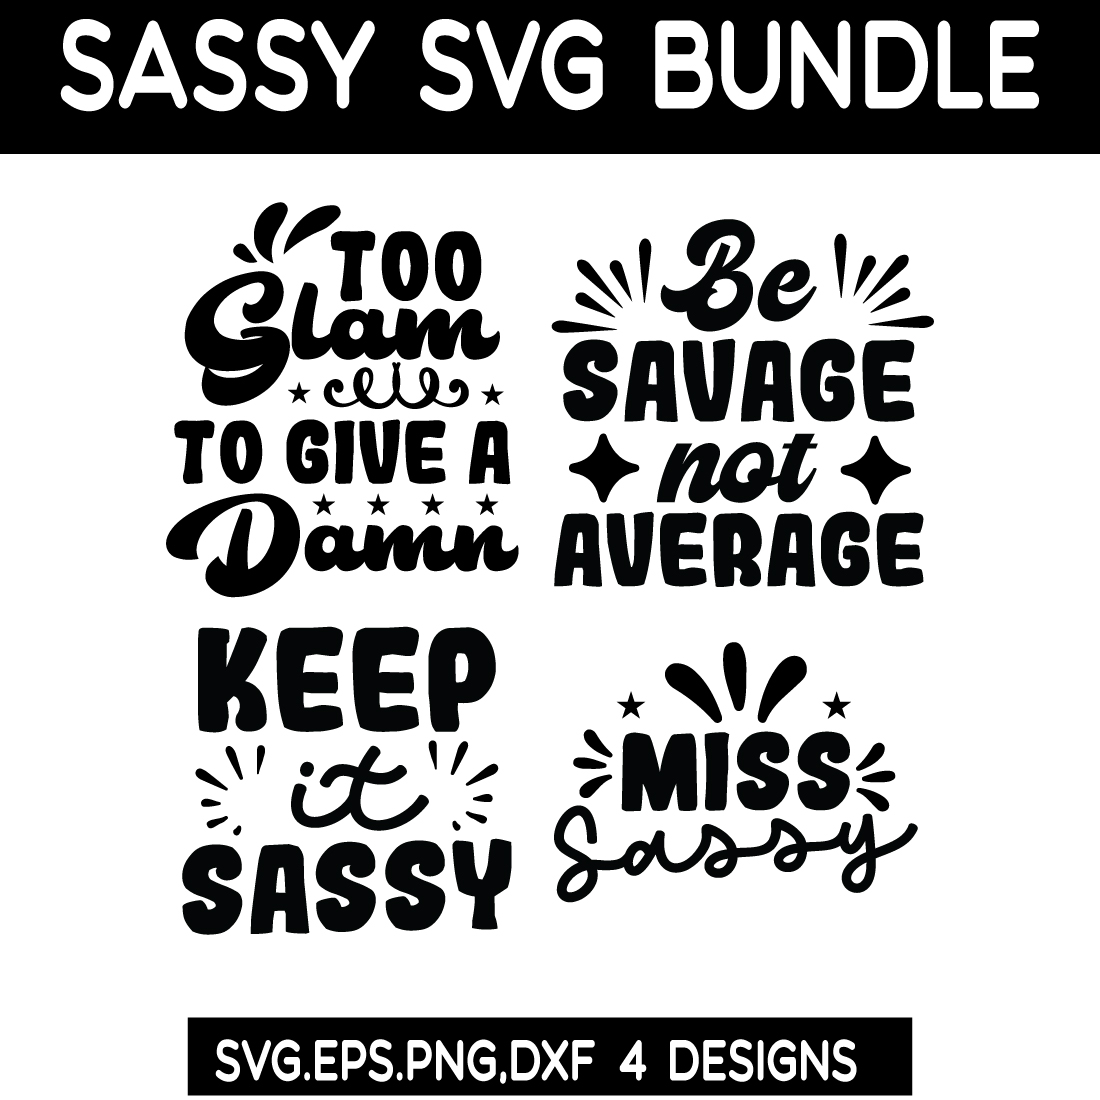 Sassy SVG bundle preview image.